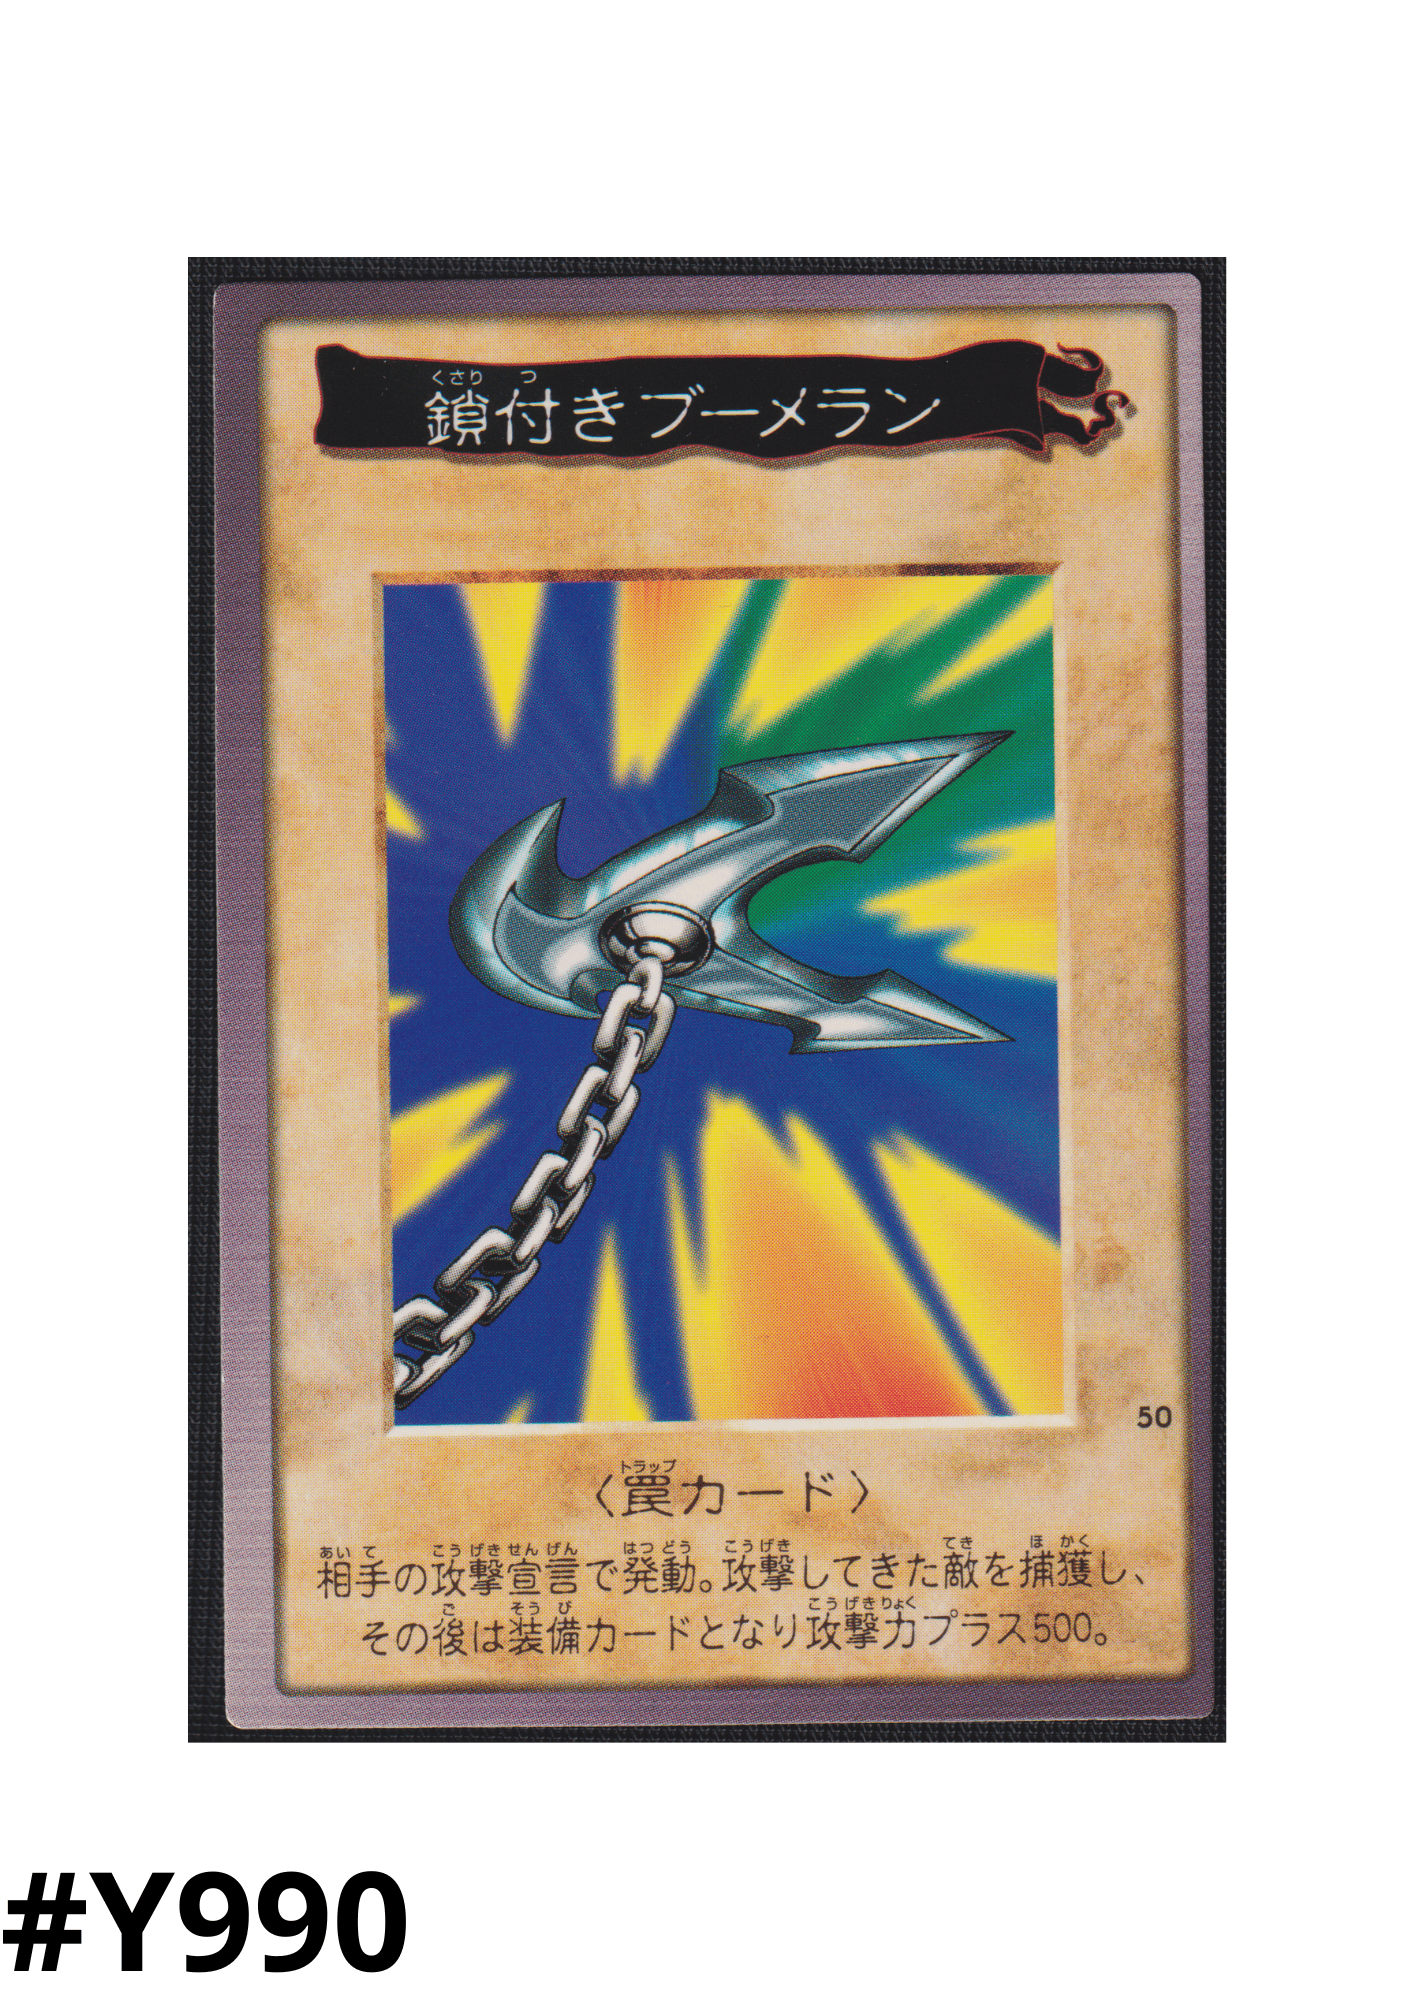 Yu-Gi-Oh! | Bandai Card No.50 | Kunai with Chain